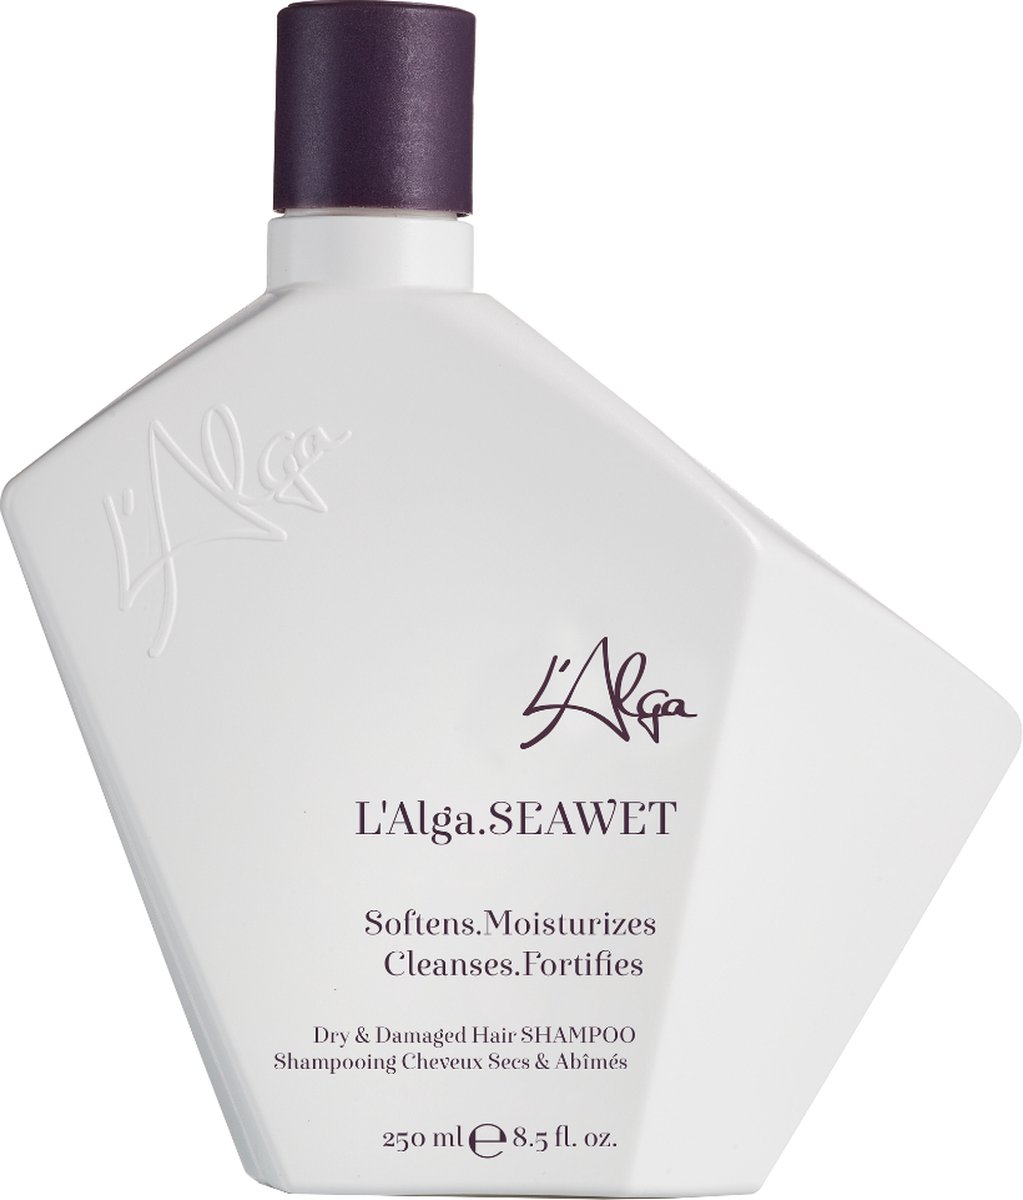 L'Alga Seawet Shampoo 250ml - Normale shampoo vrouwen - Voor Alle haartypes